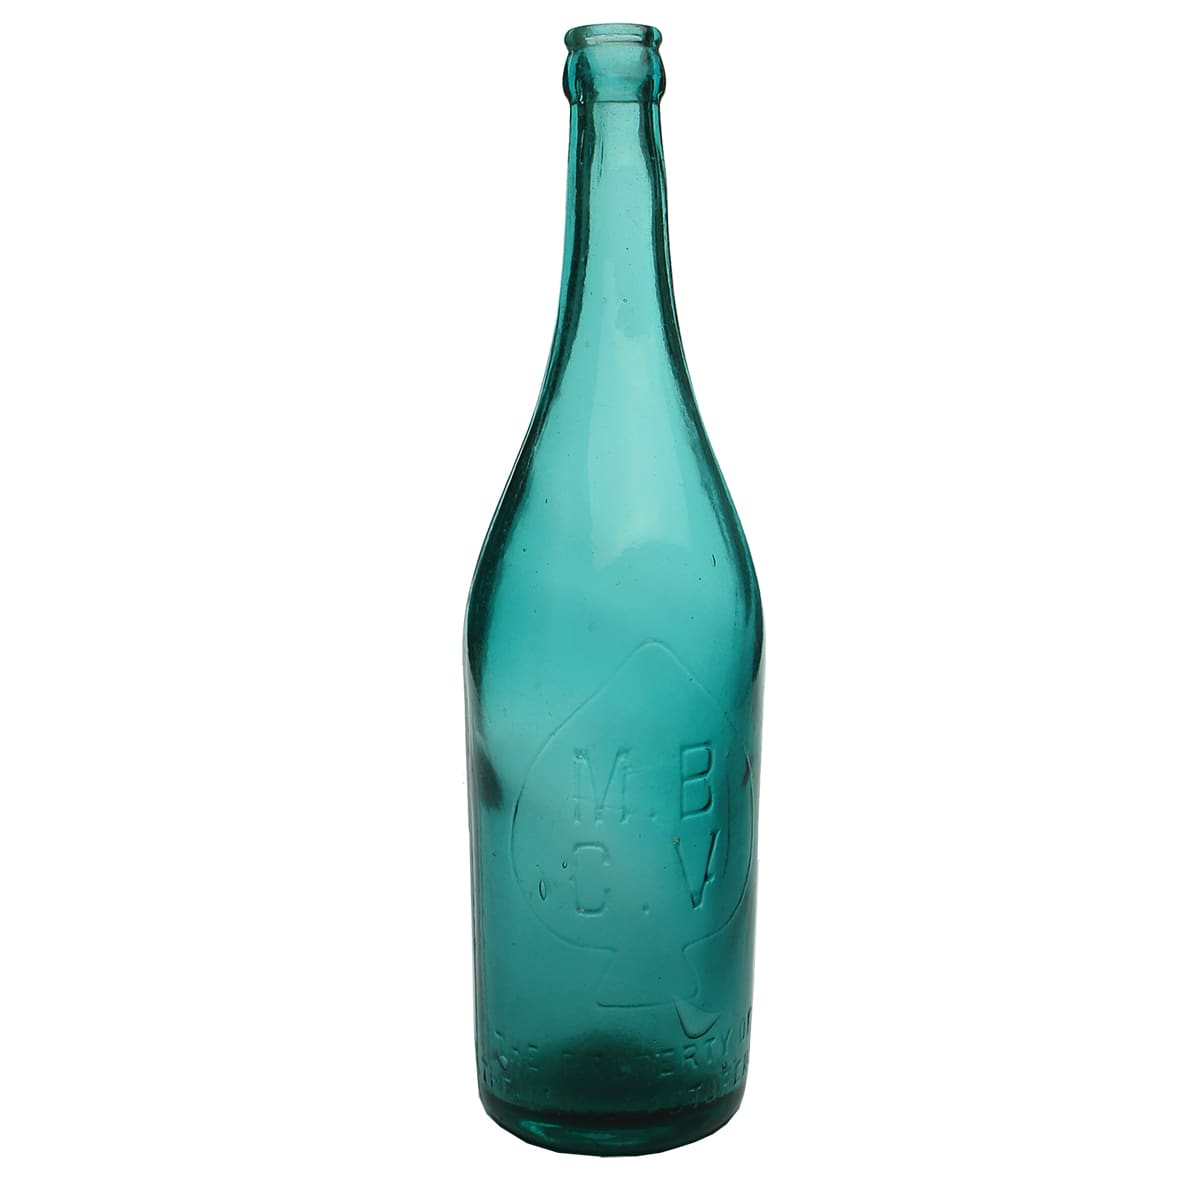 Beer. MBCV Spade. Manufacturers Bottle Company of Victoria. Petrol Blue. Crown Seal. 26 oz. (Victoria)